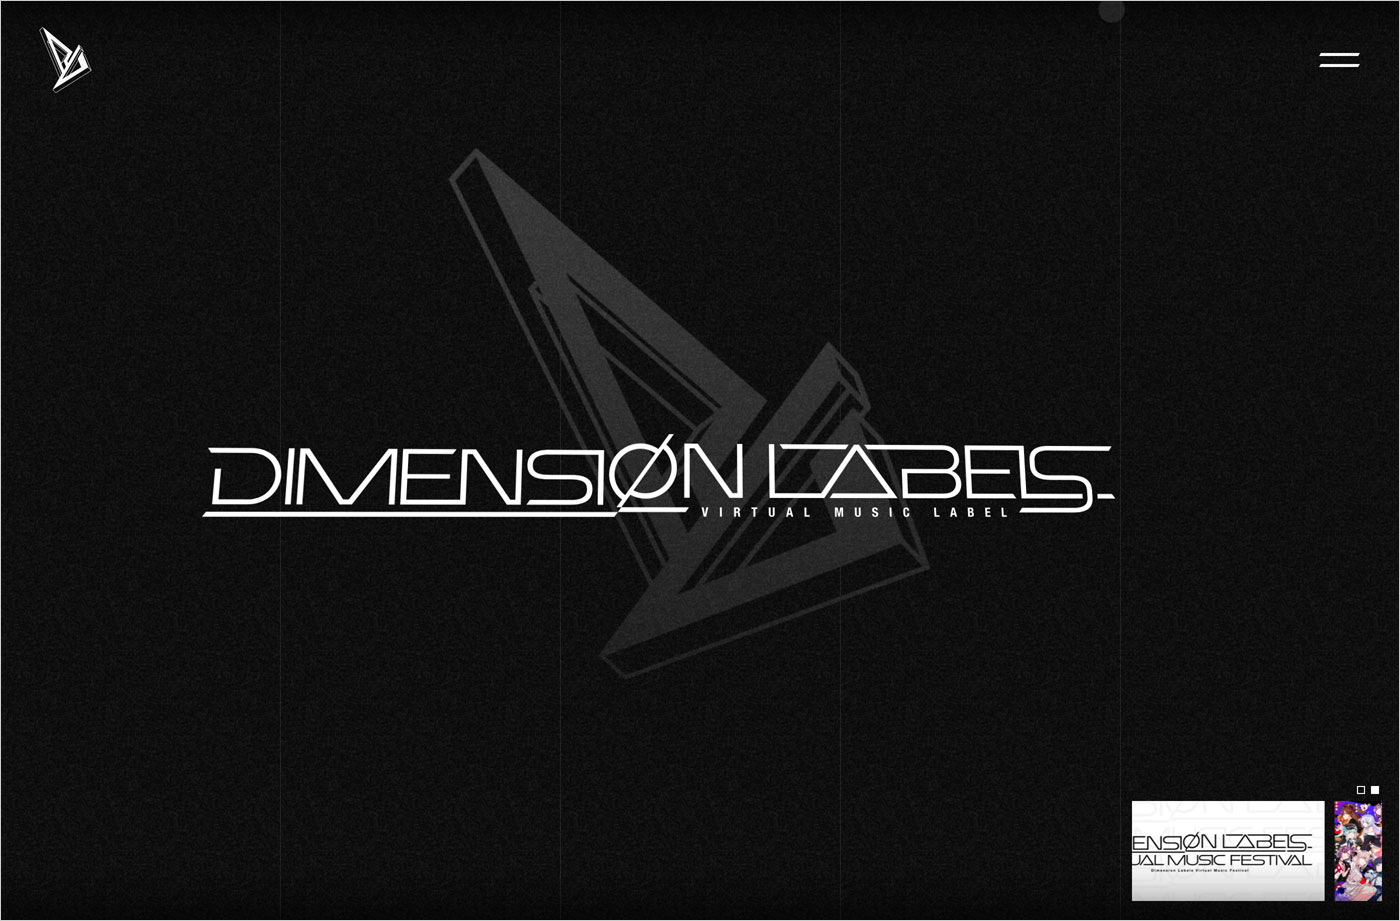 Dimension Labelsウェブサイトの画面キャプチャ画像